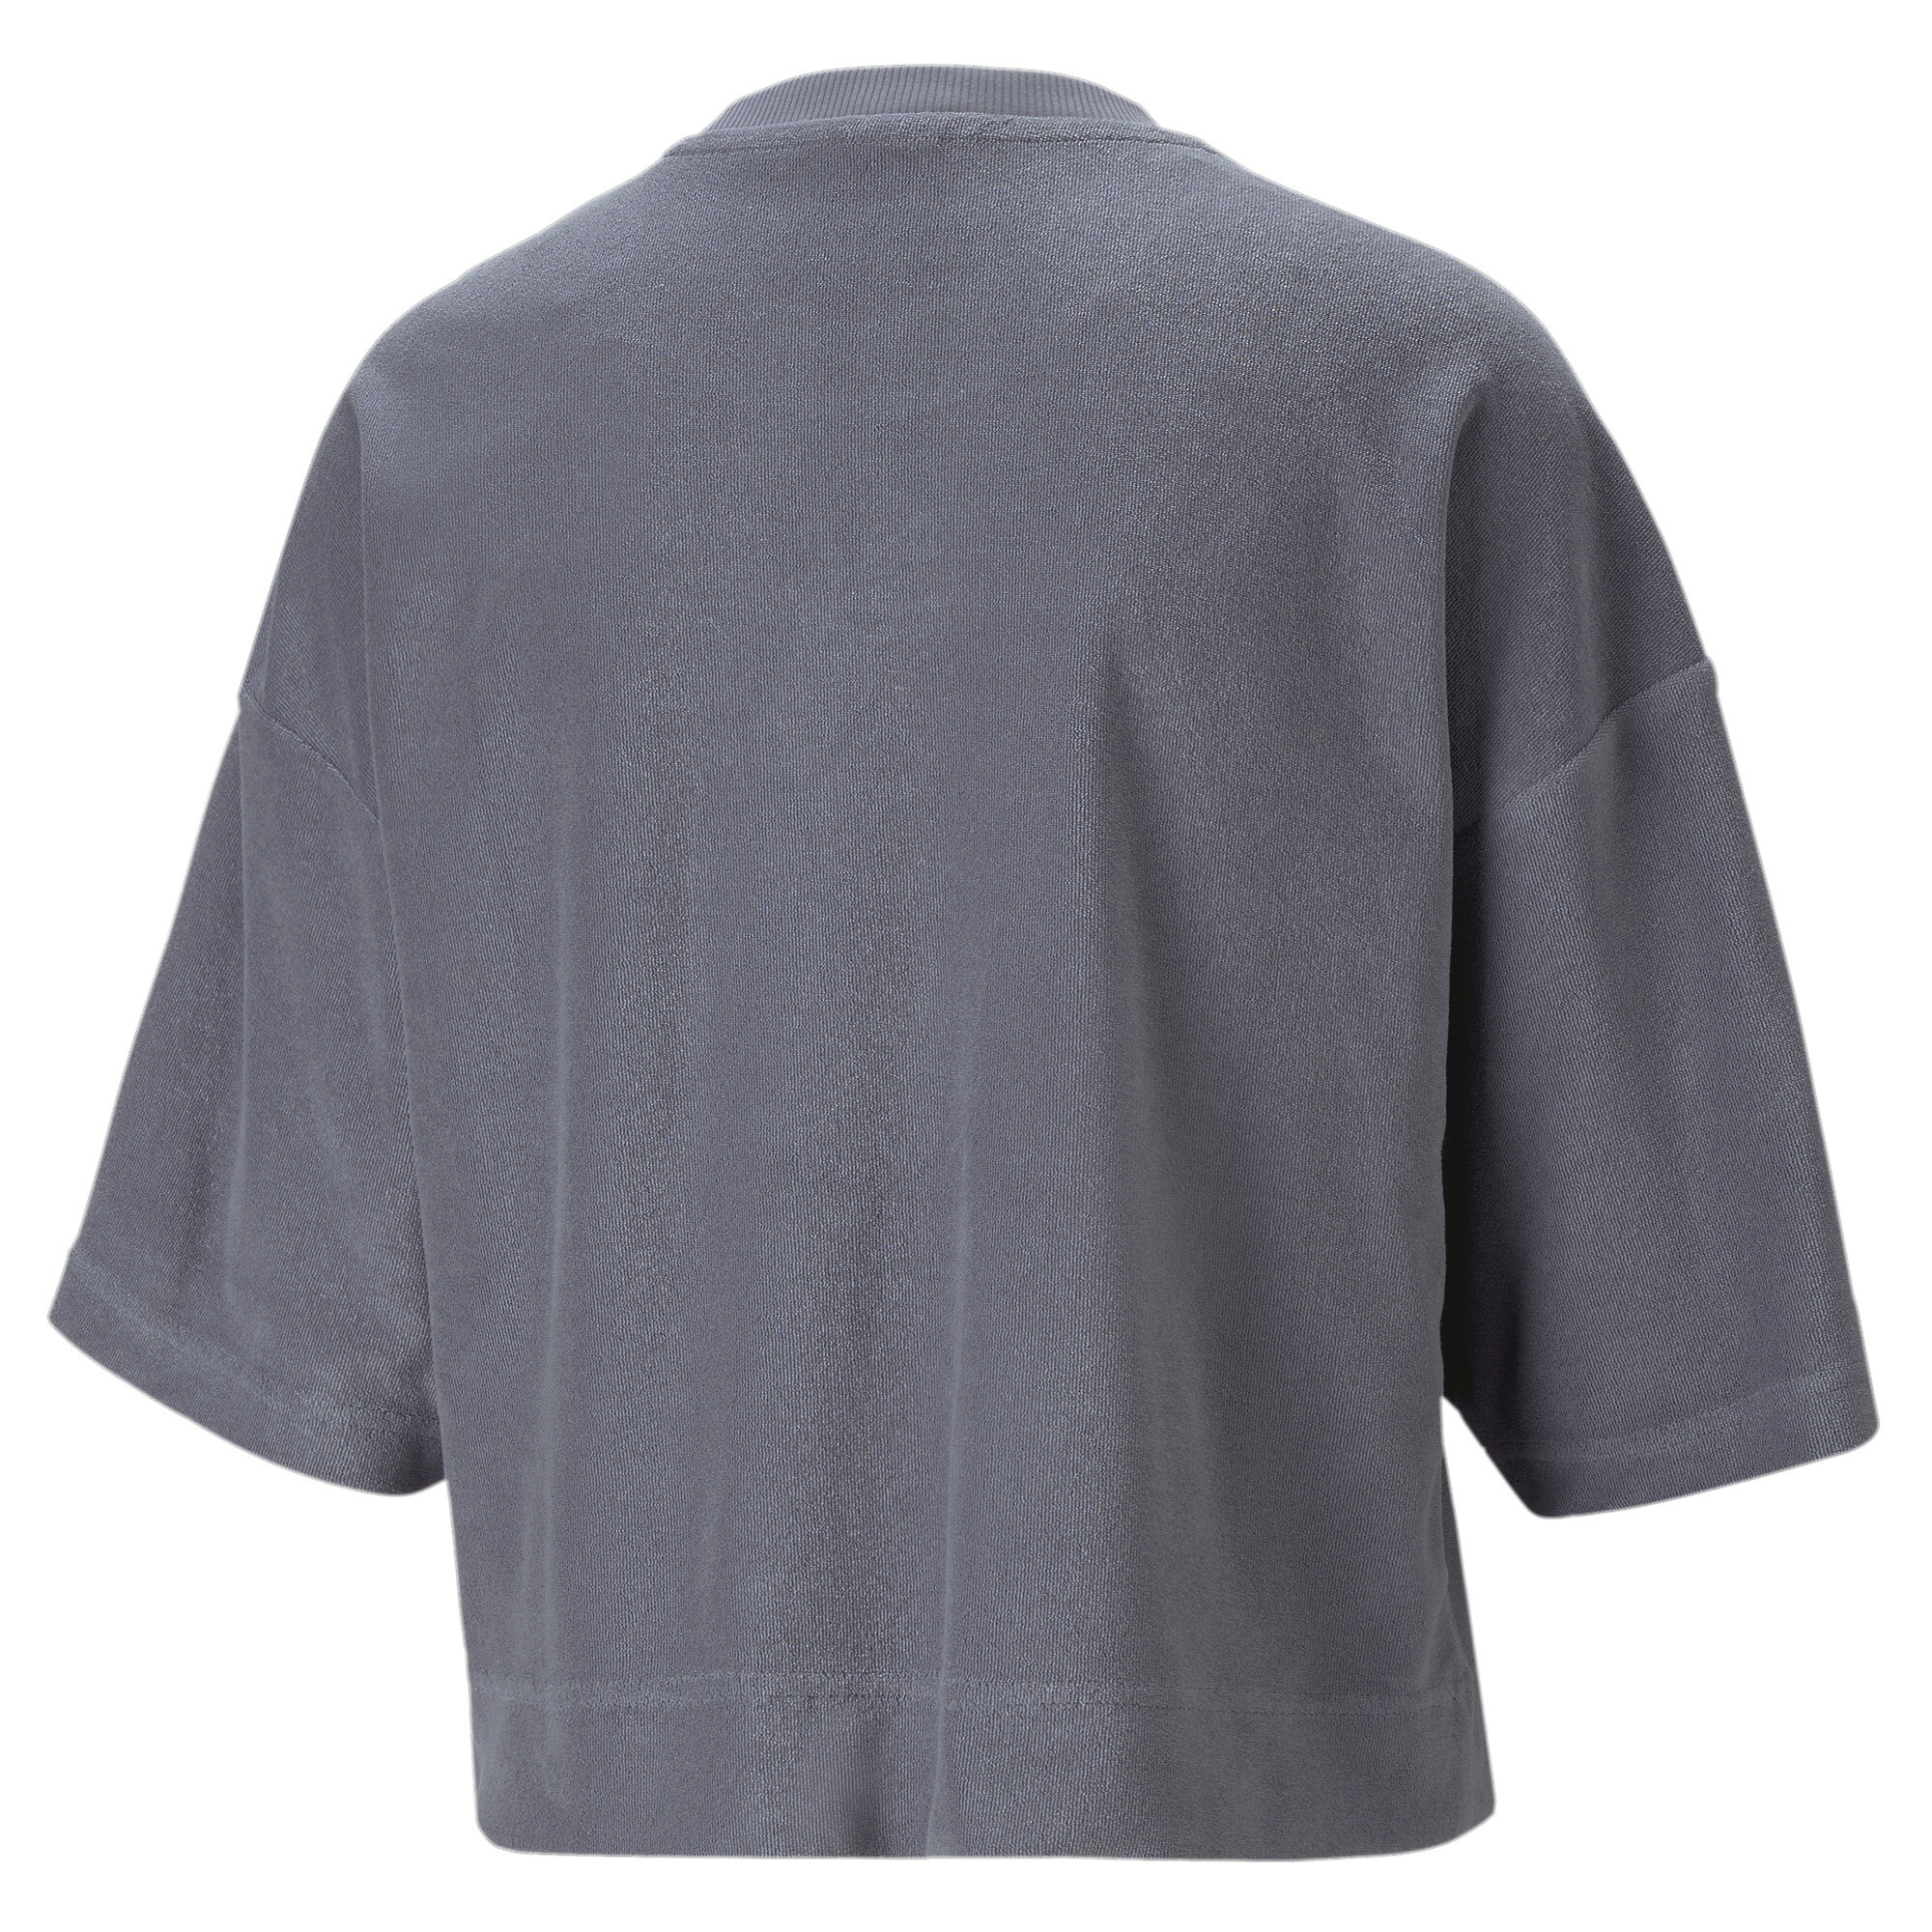 Women's Puma Classics Towelling T-Shirt, Gray, Size L, Clothing